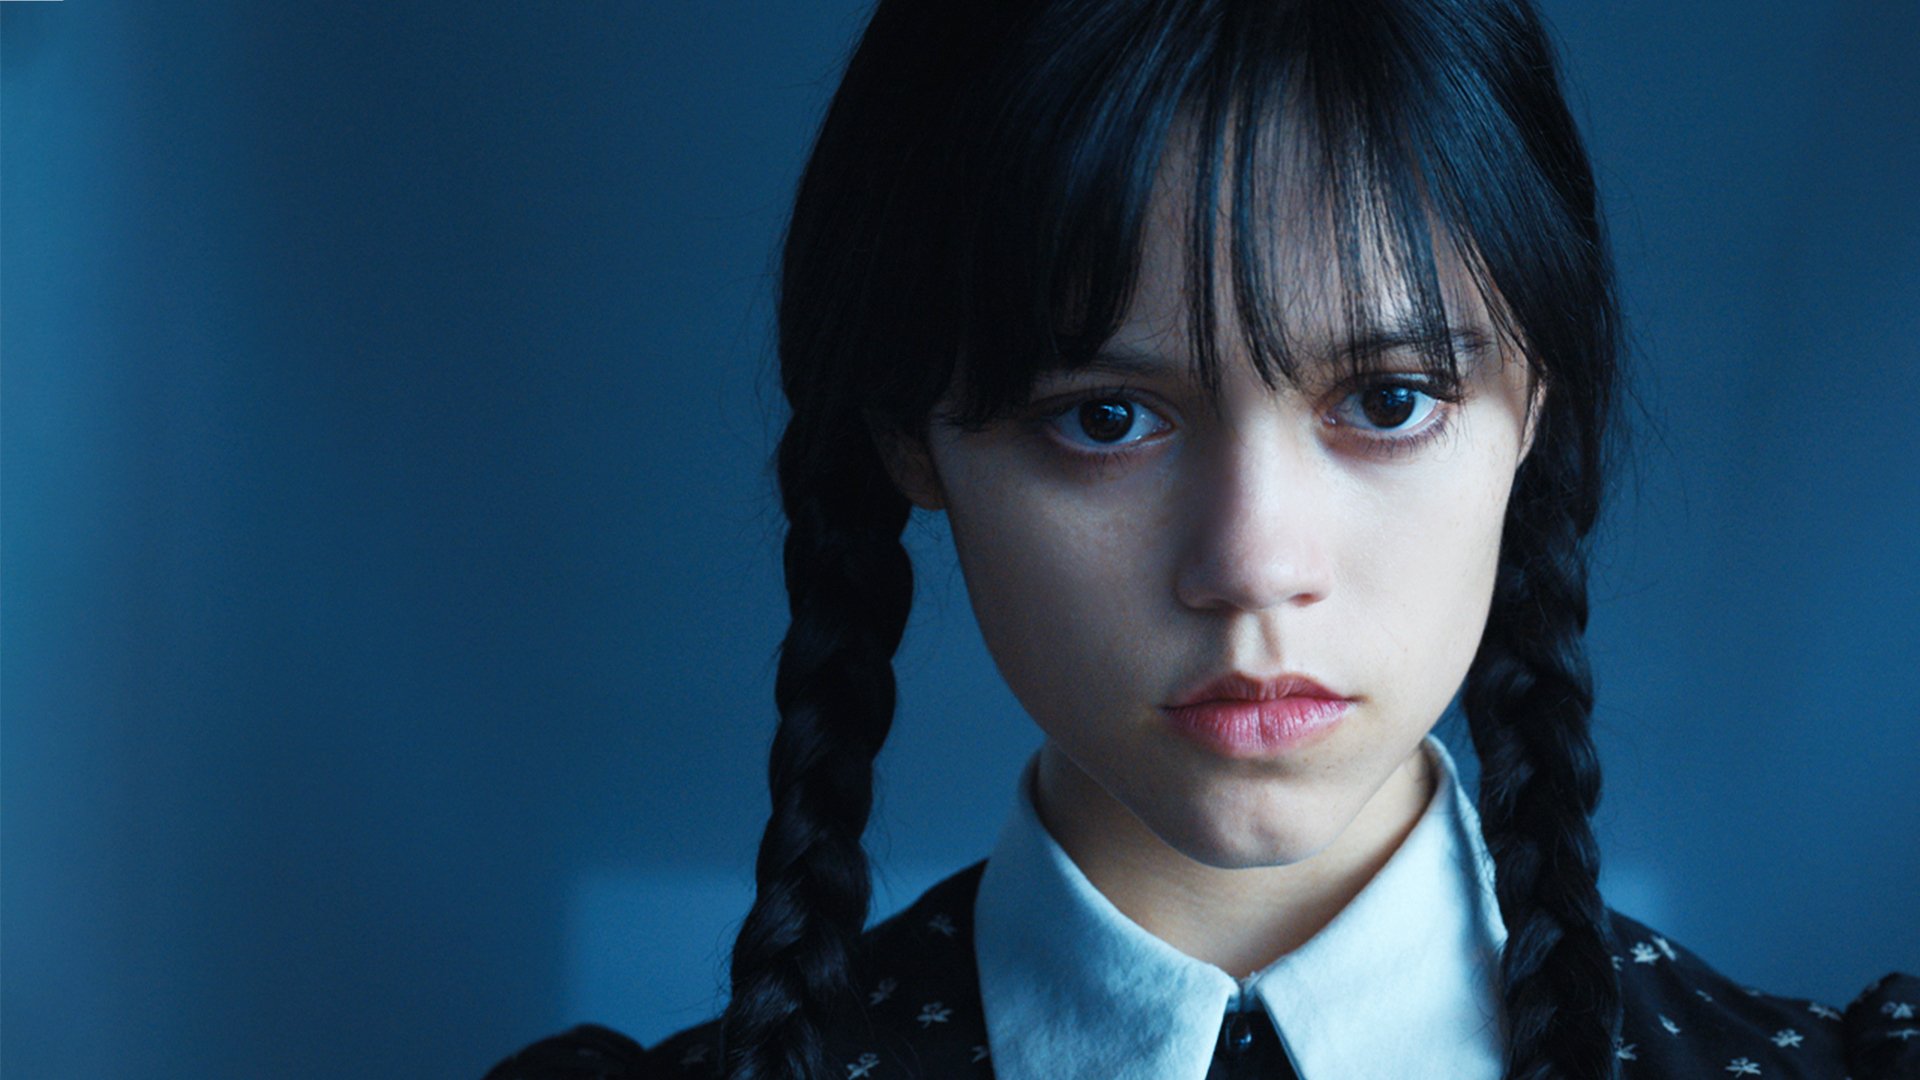 Wednesday' teaser sees Jenna Ortega embodying Wednesday Addams